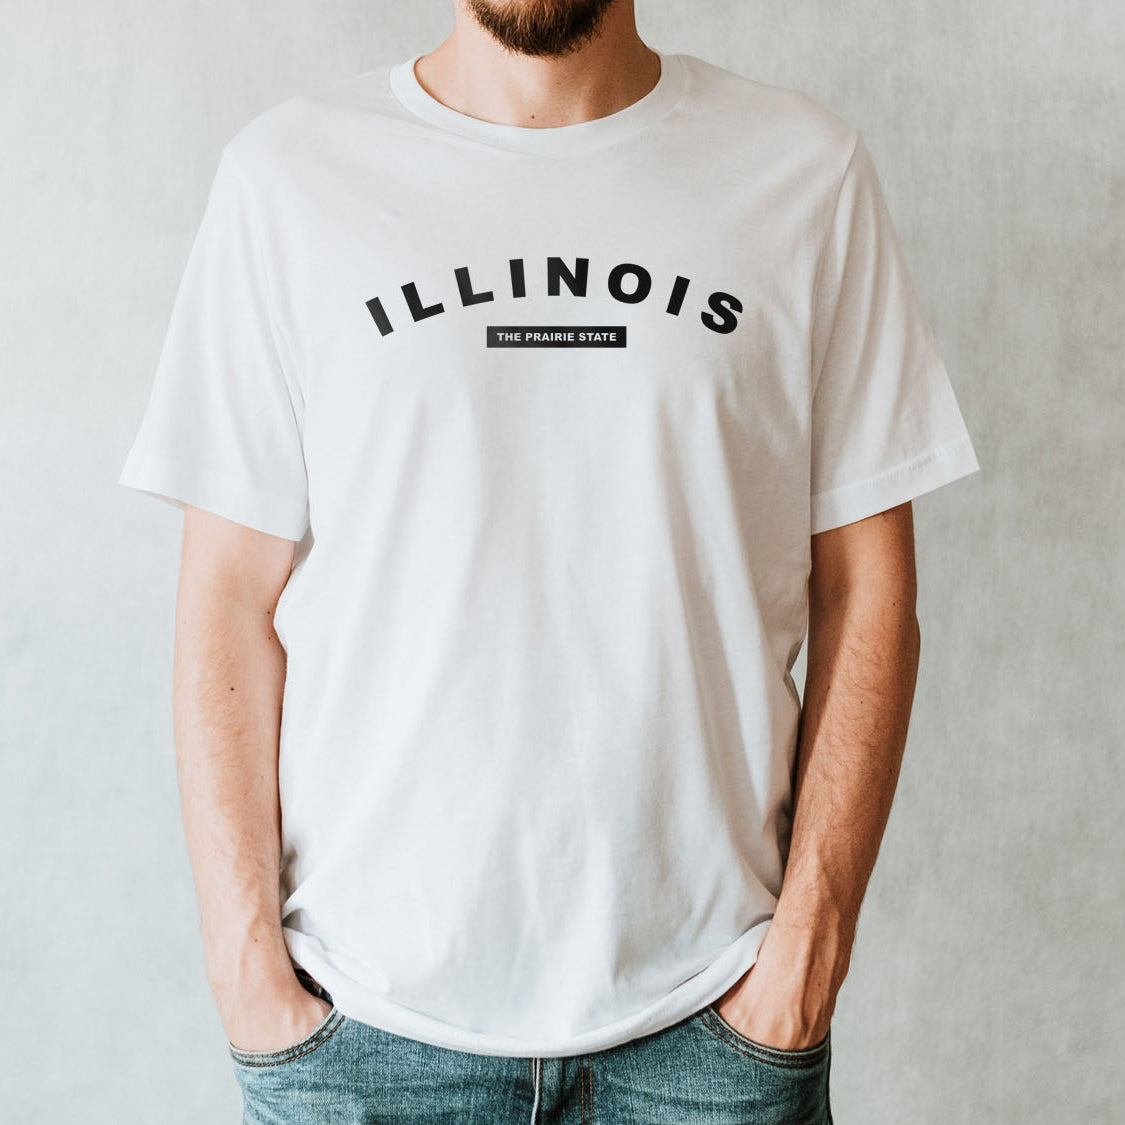 Illinois The Prairie State T-shirt - United States Name & Slogan Minimal Design Printed Tee Shirt